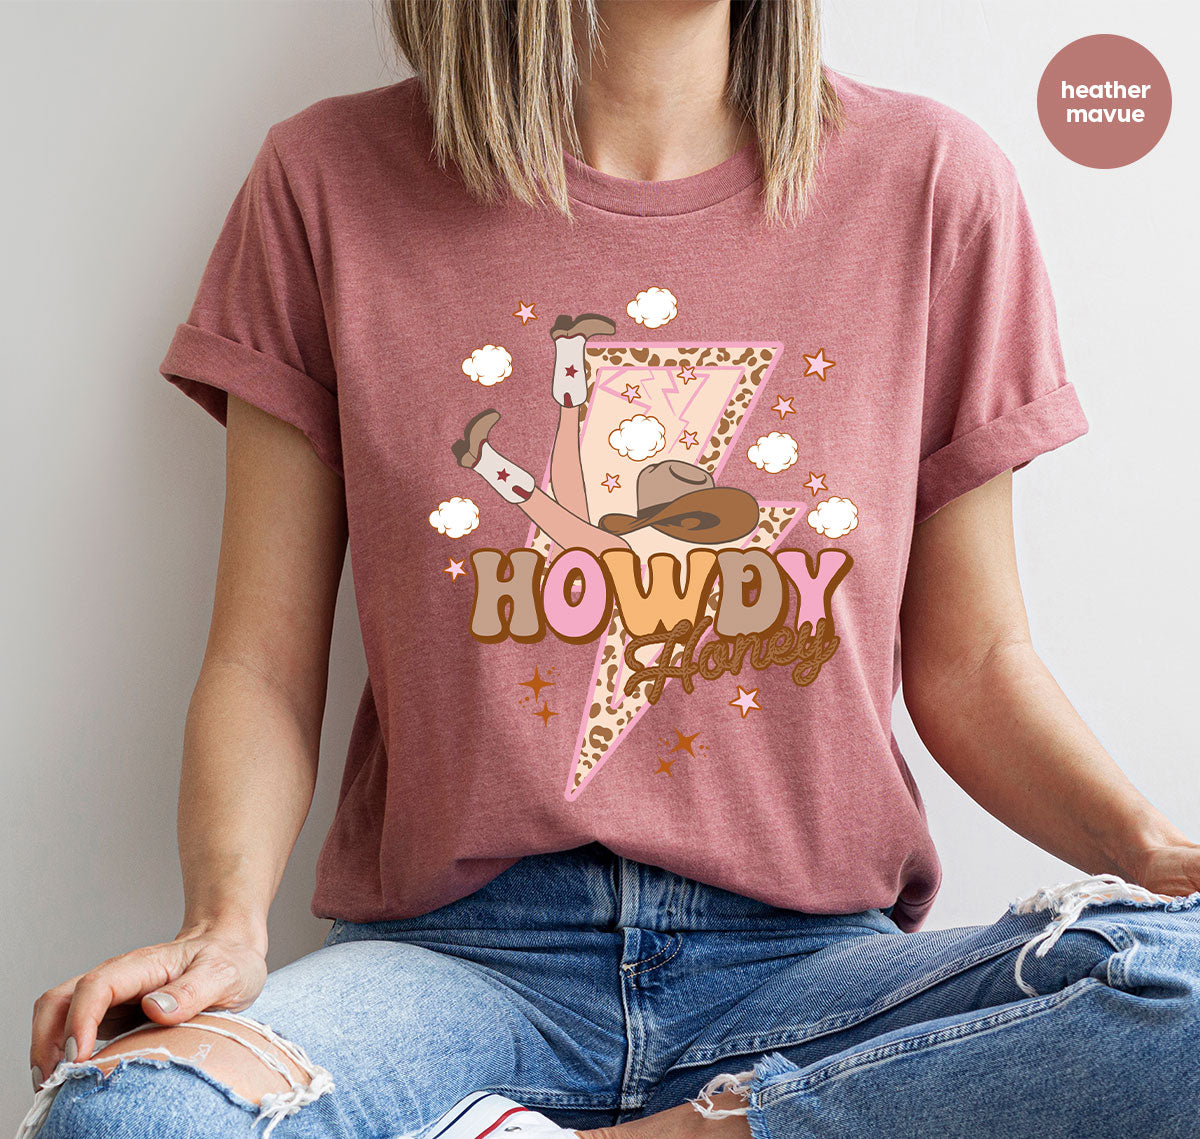 Howdy Honey Shirt, Valentine's Day T-Shirt, Valentine Honey Tee